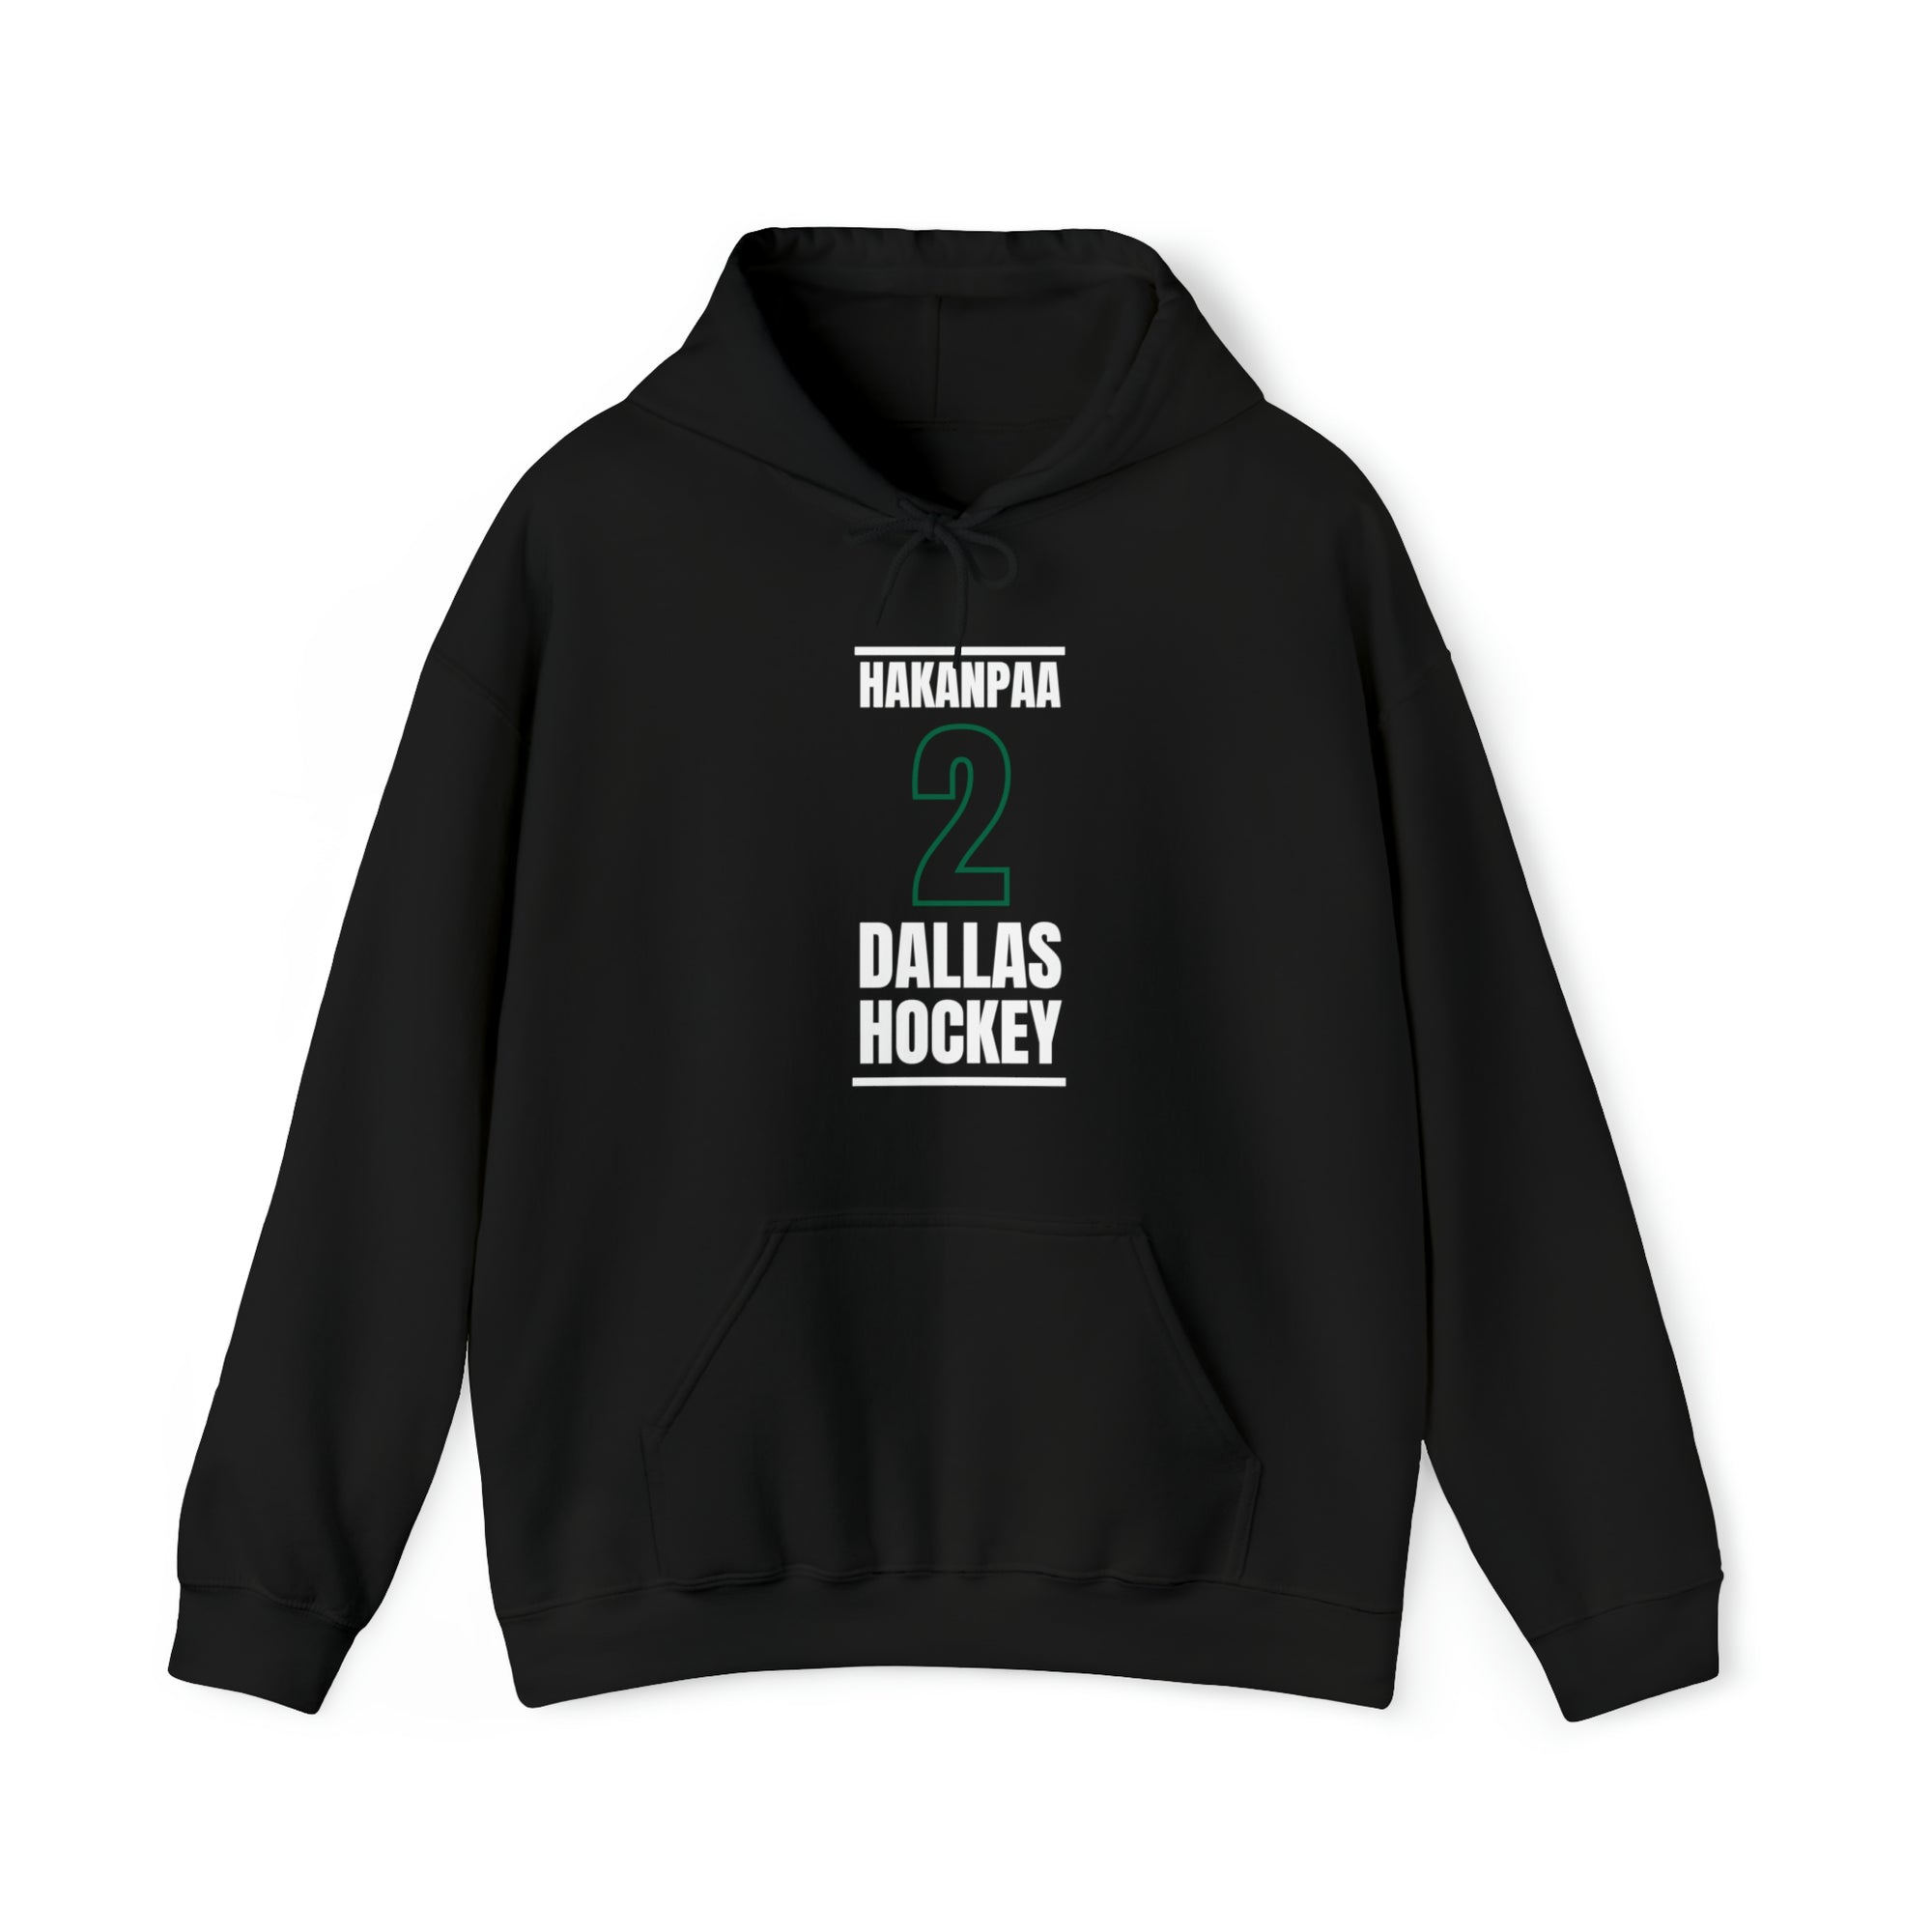 Hakanpaa 2 Dallas Hockey Black Vertical Design Unisex Hooded Sweatshirt